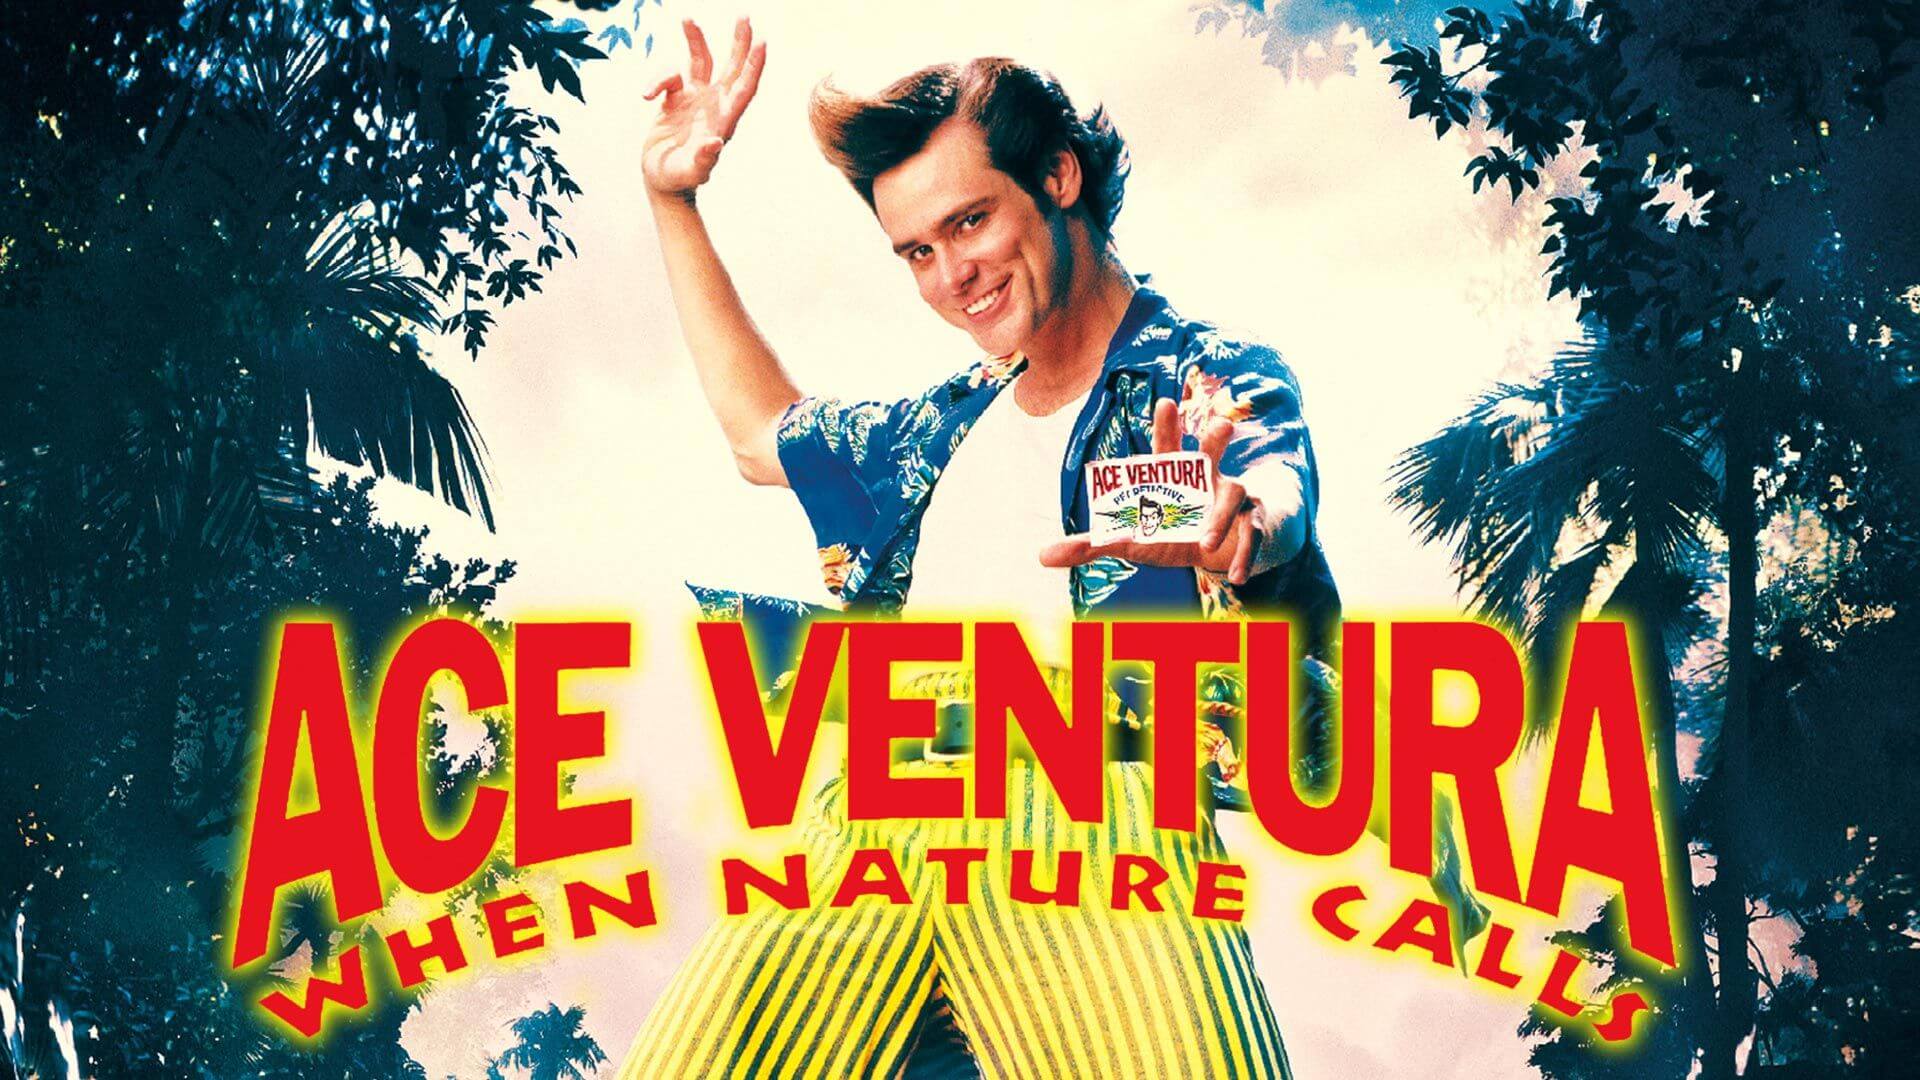 Jesse Ventura  I love to laugh, Ventura, Fun